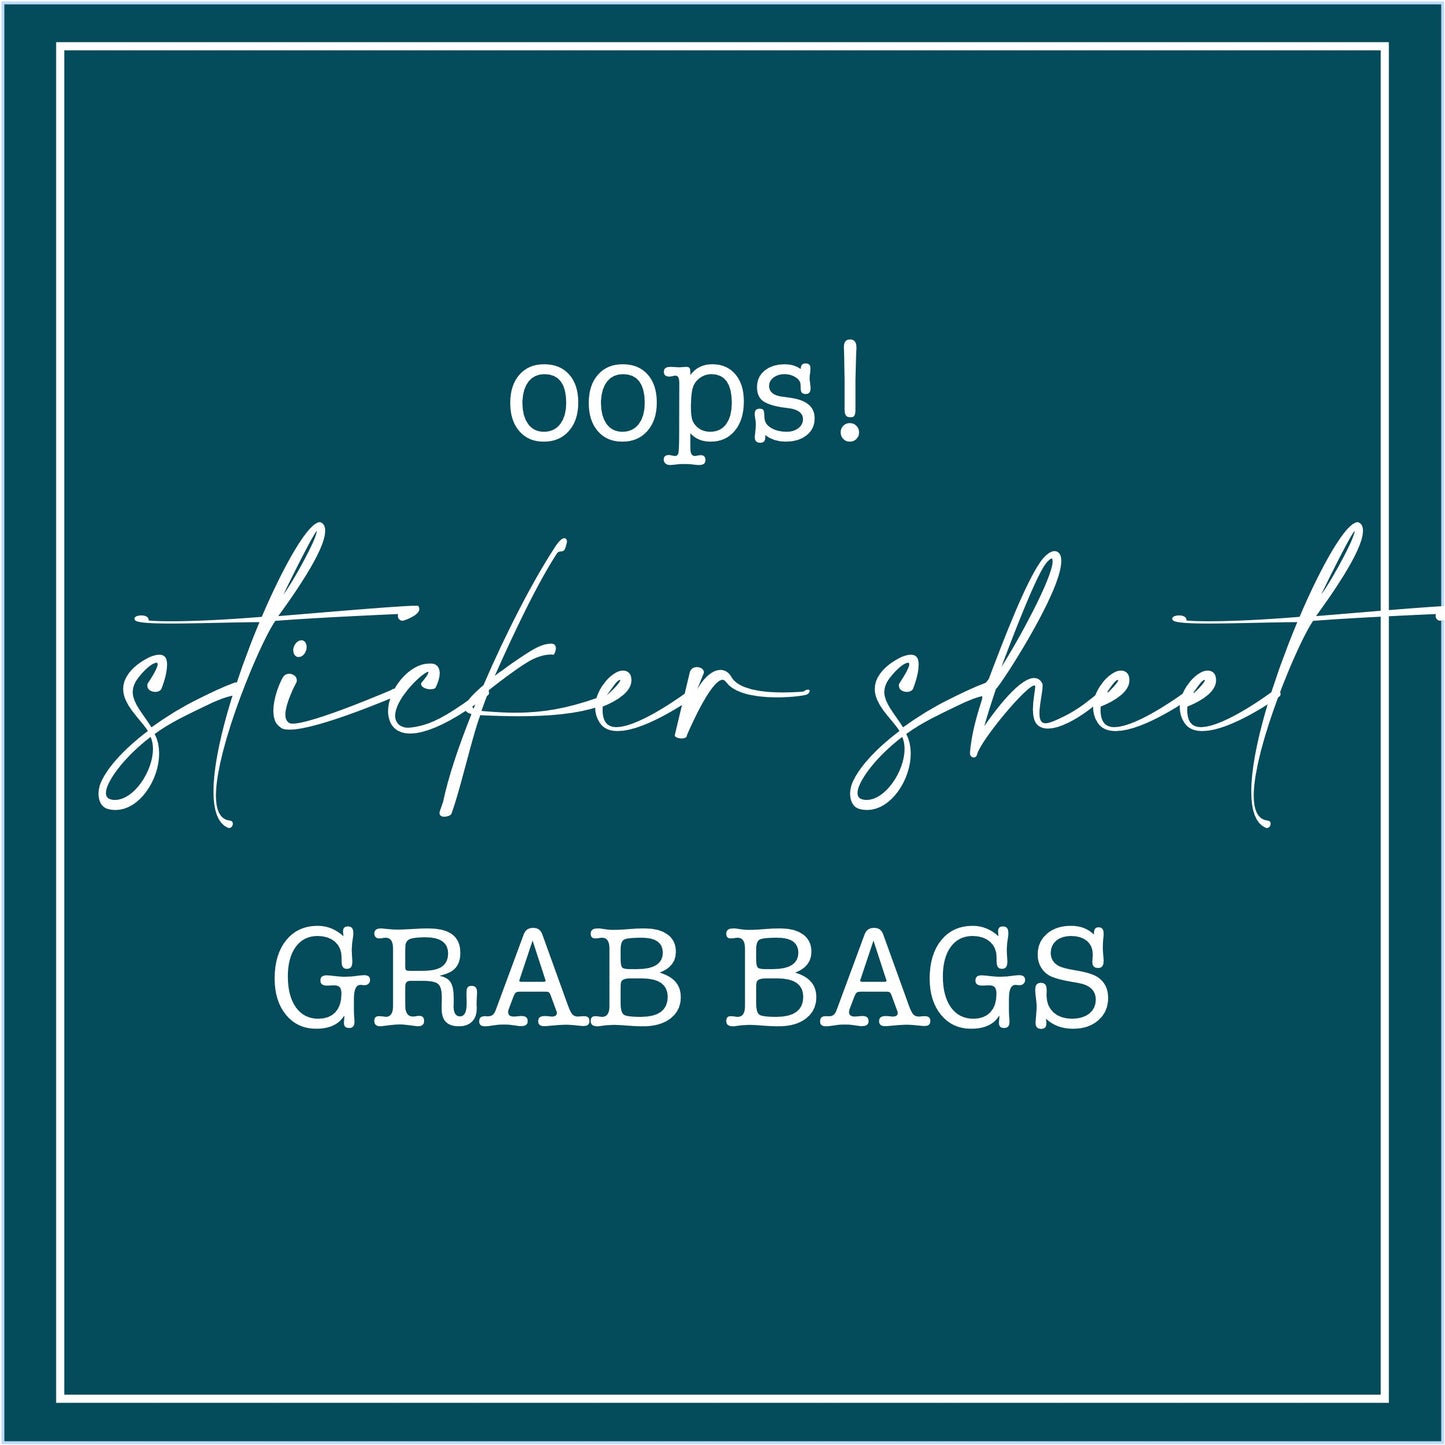 Oops Sticker Sheet Grab Bag